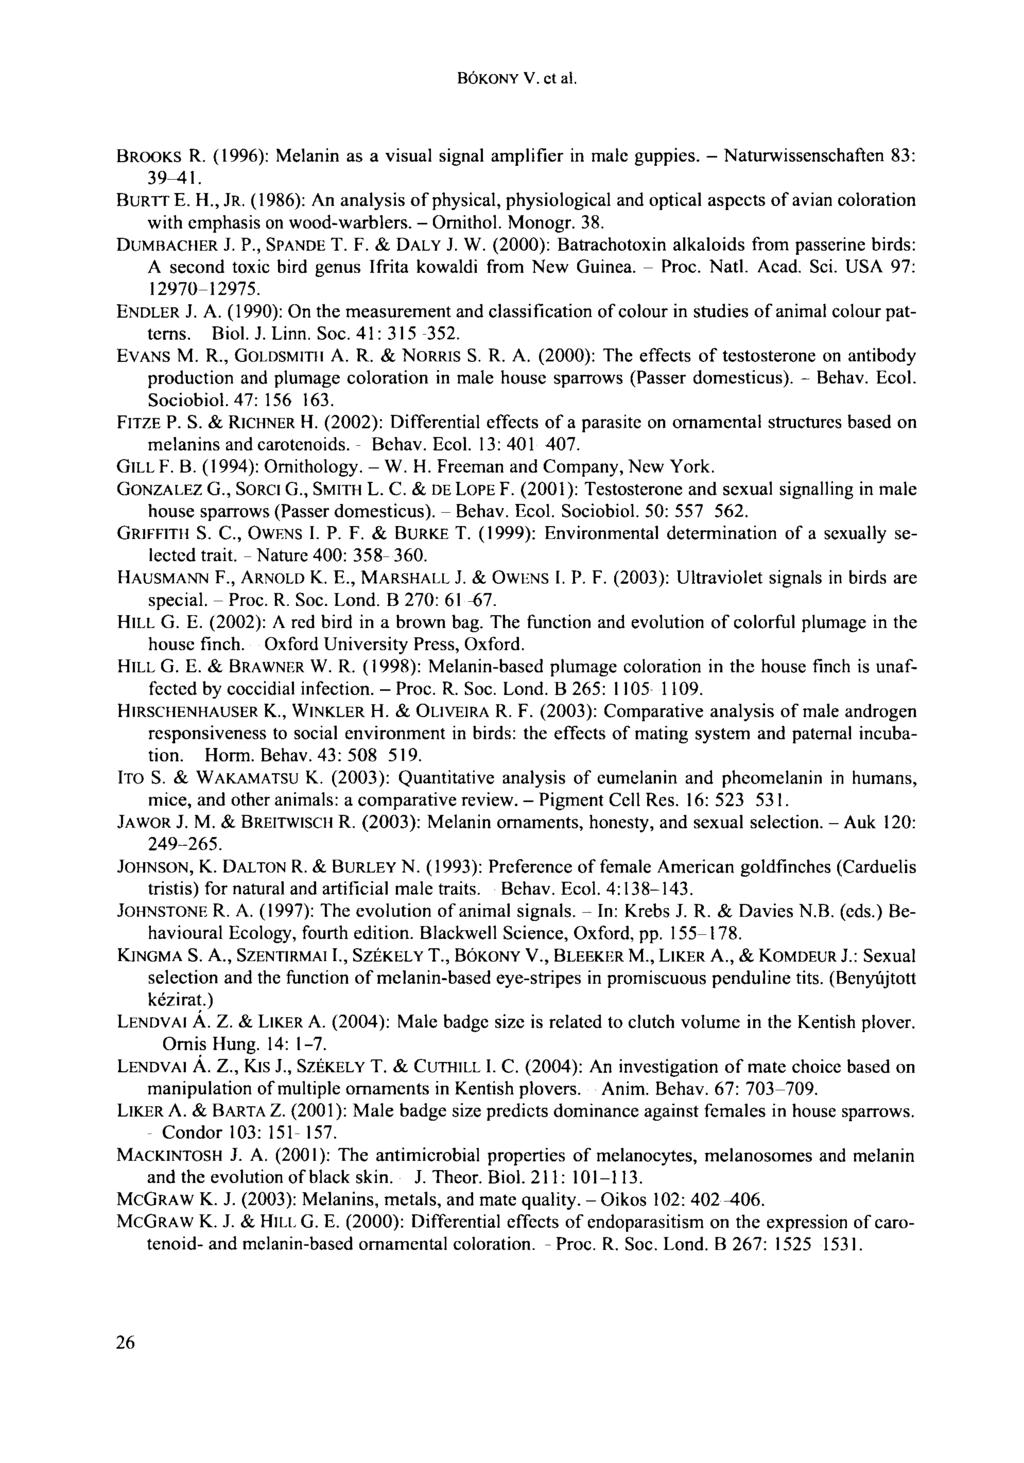 BÓKONY V. et al. BROOKS R. (1996): Melanin as a visual signal amplifier in male guppies. Naturwissenschaften 83: 39-41. BURTTE. H., JR.